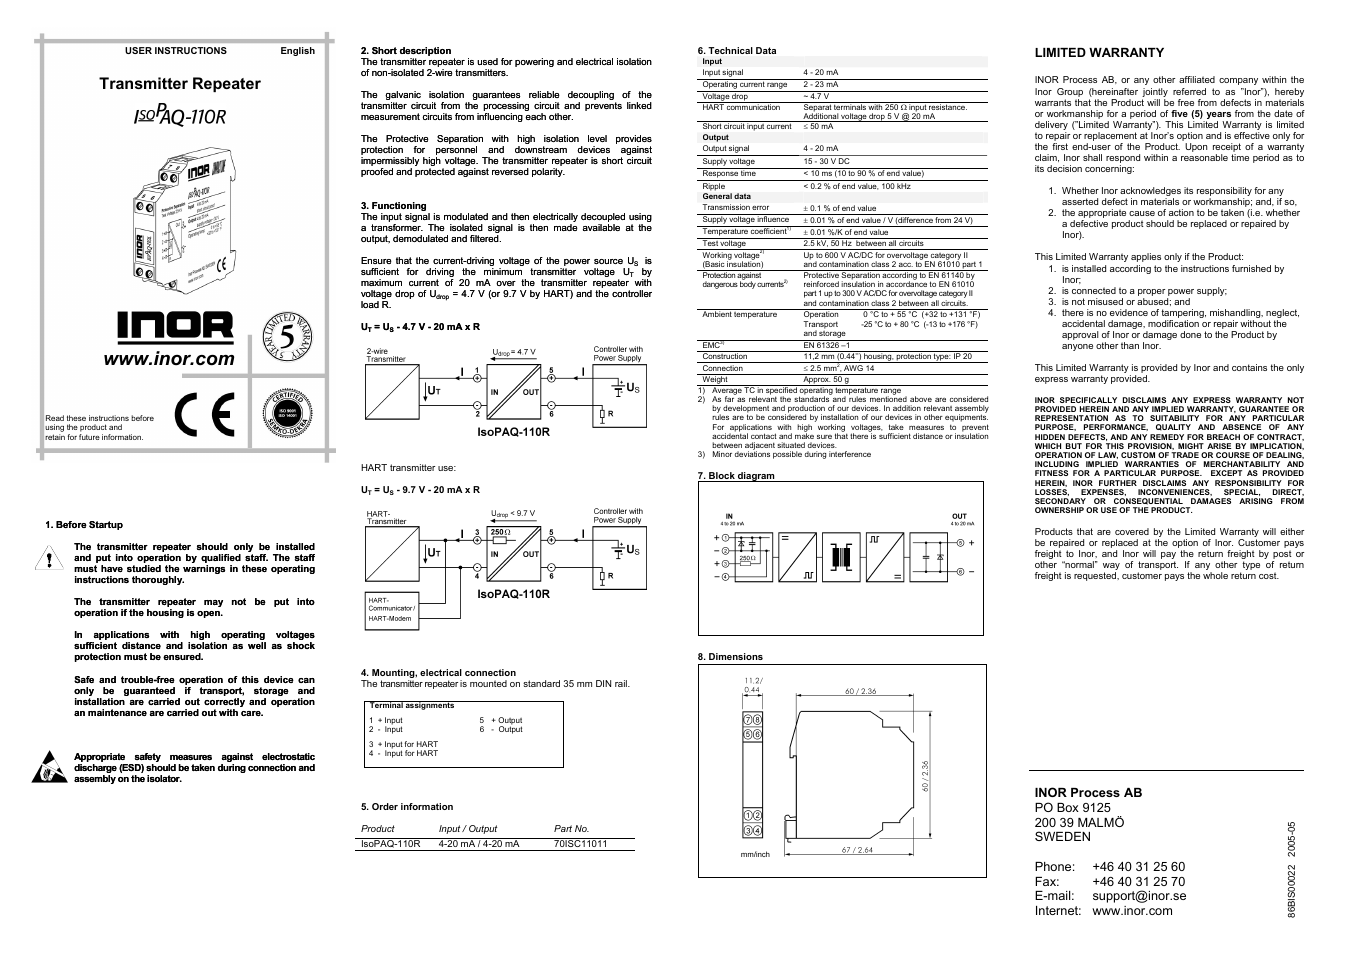 INOR ISOPAQ-110R GB User Manual | 1 page